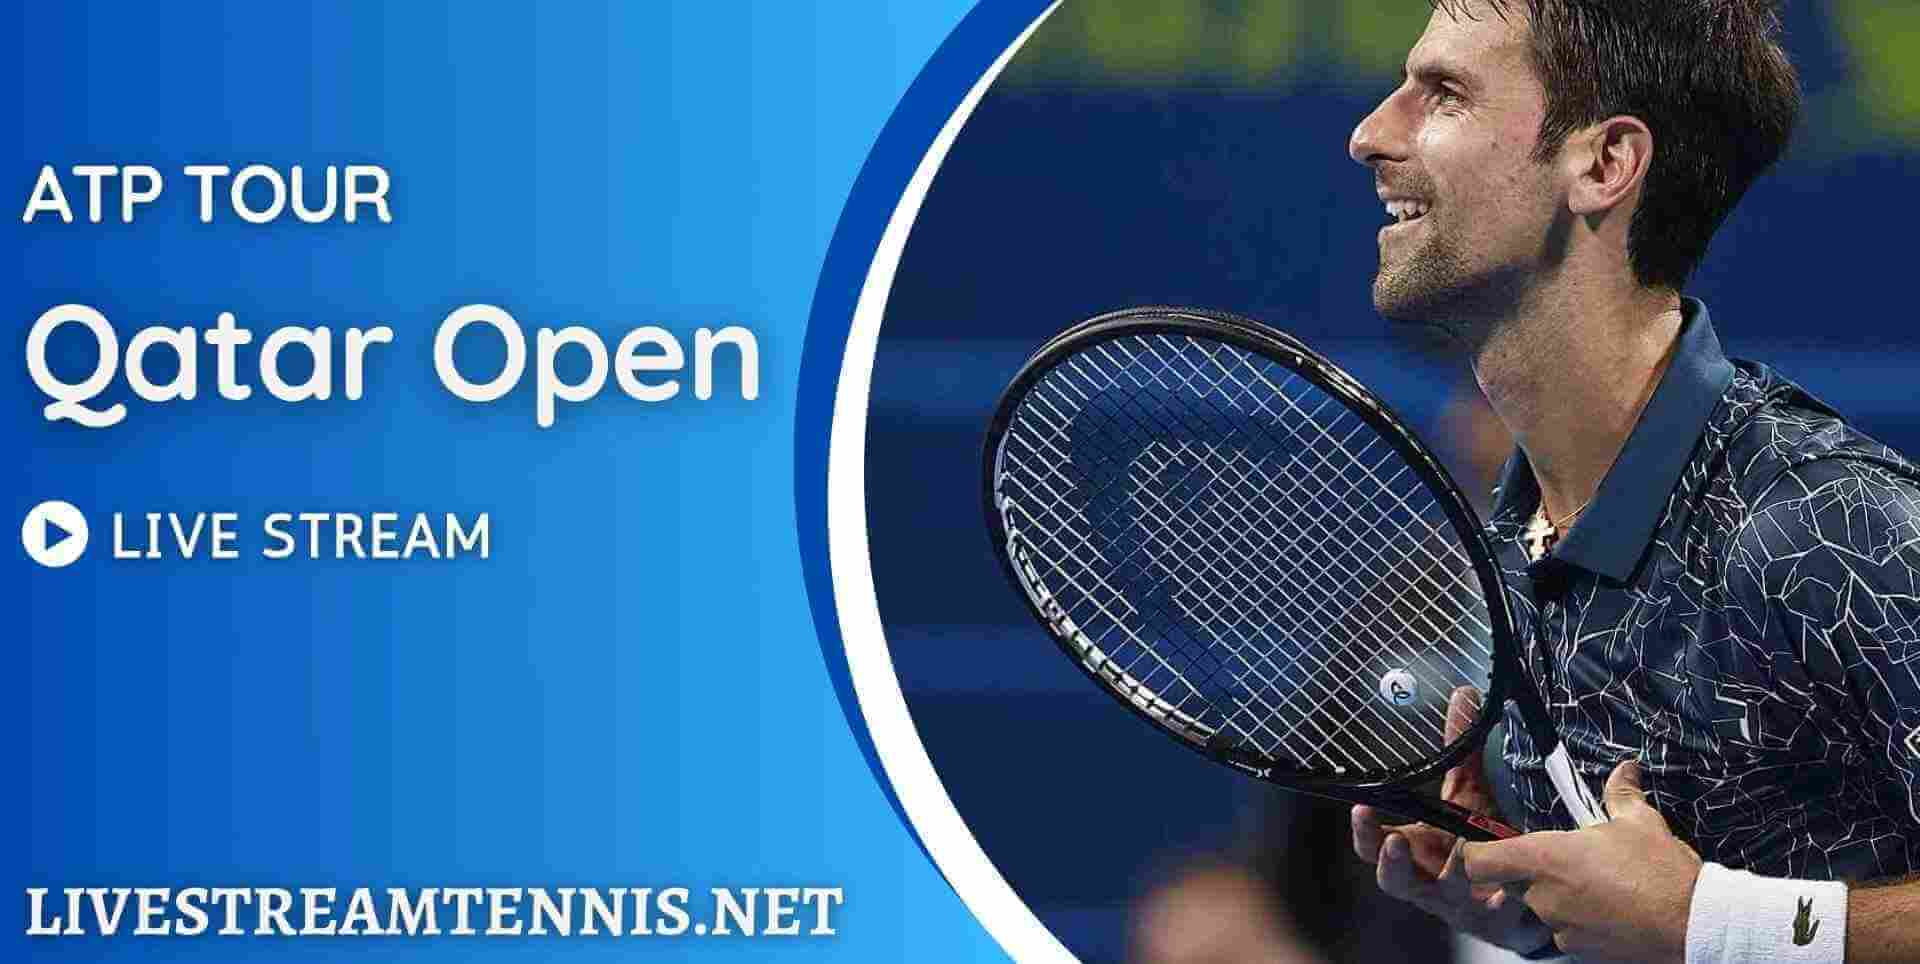 Qatar Open ATP Tour Live Stream Tennis